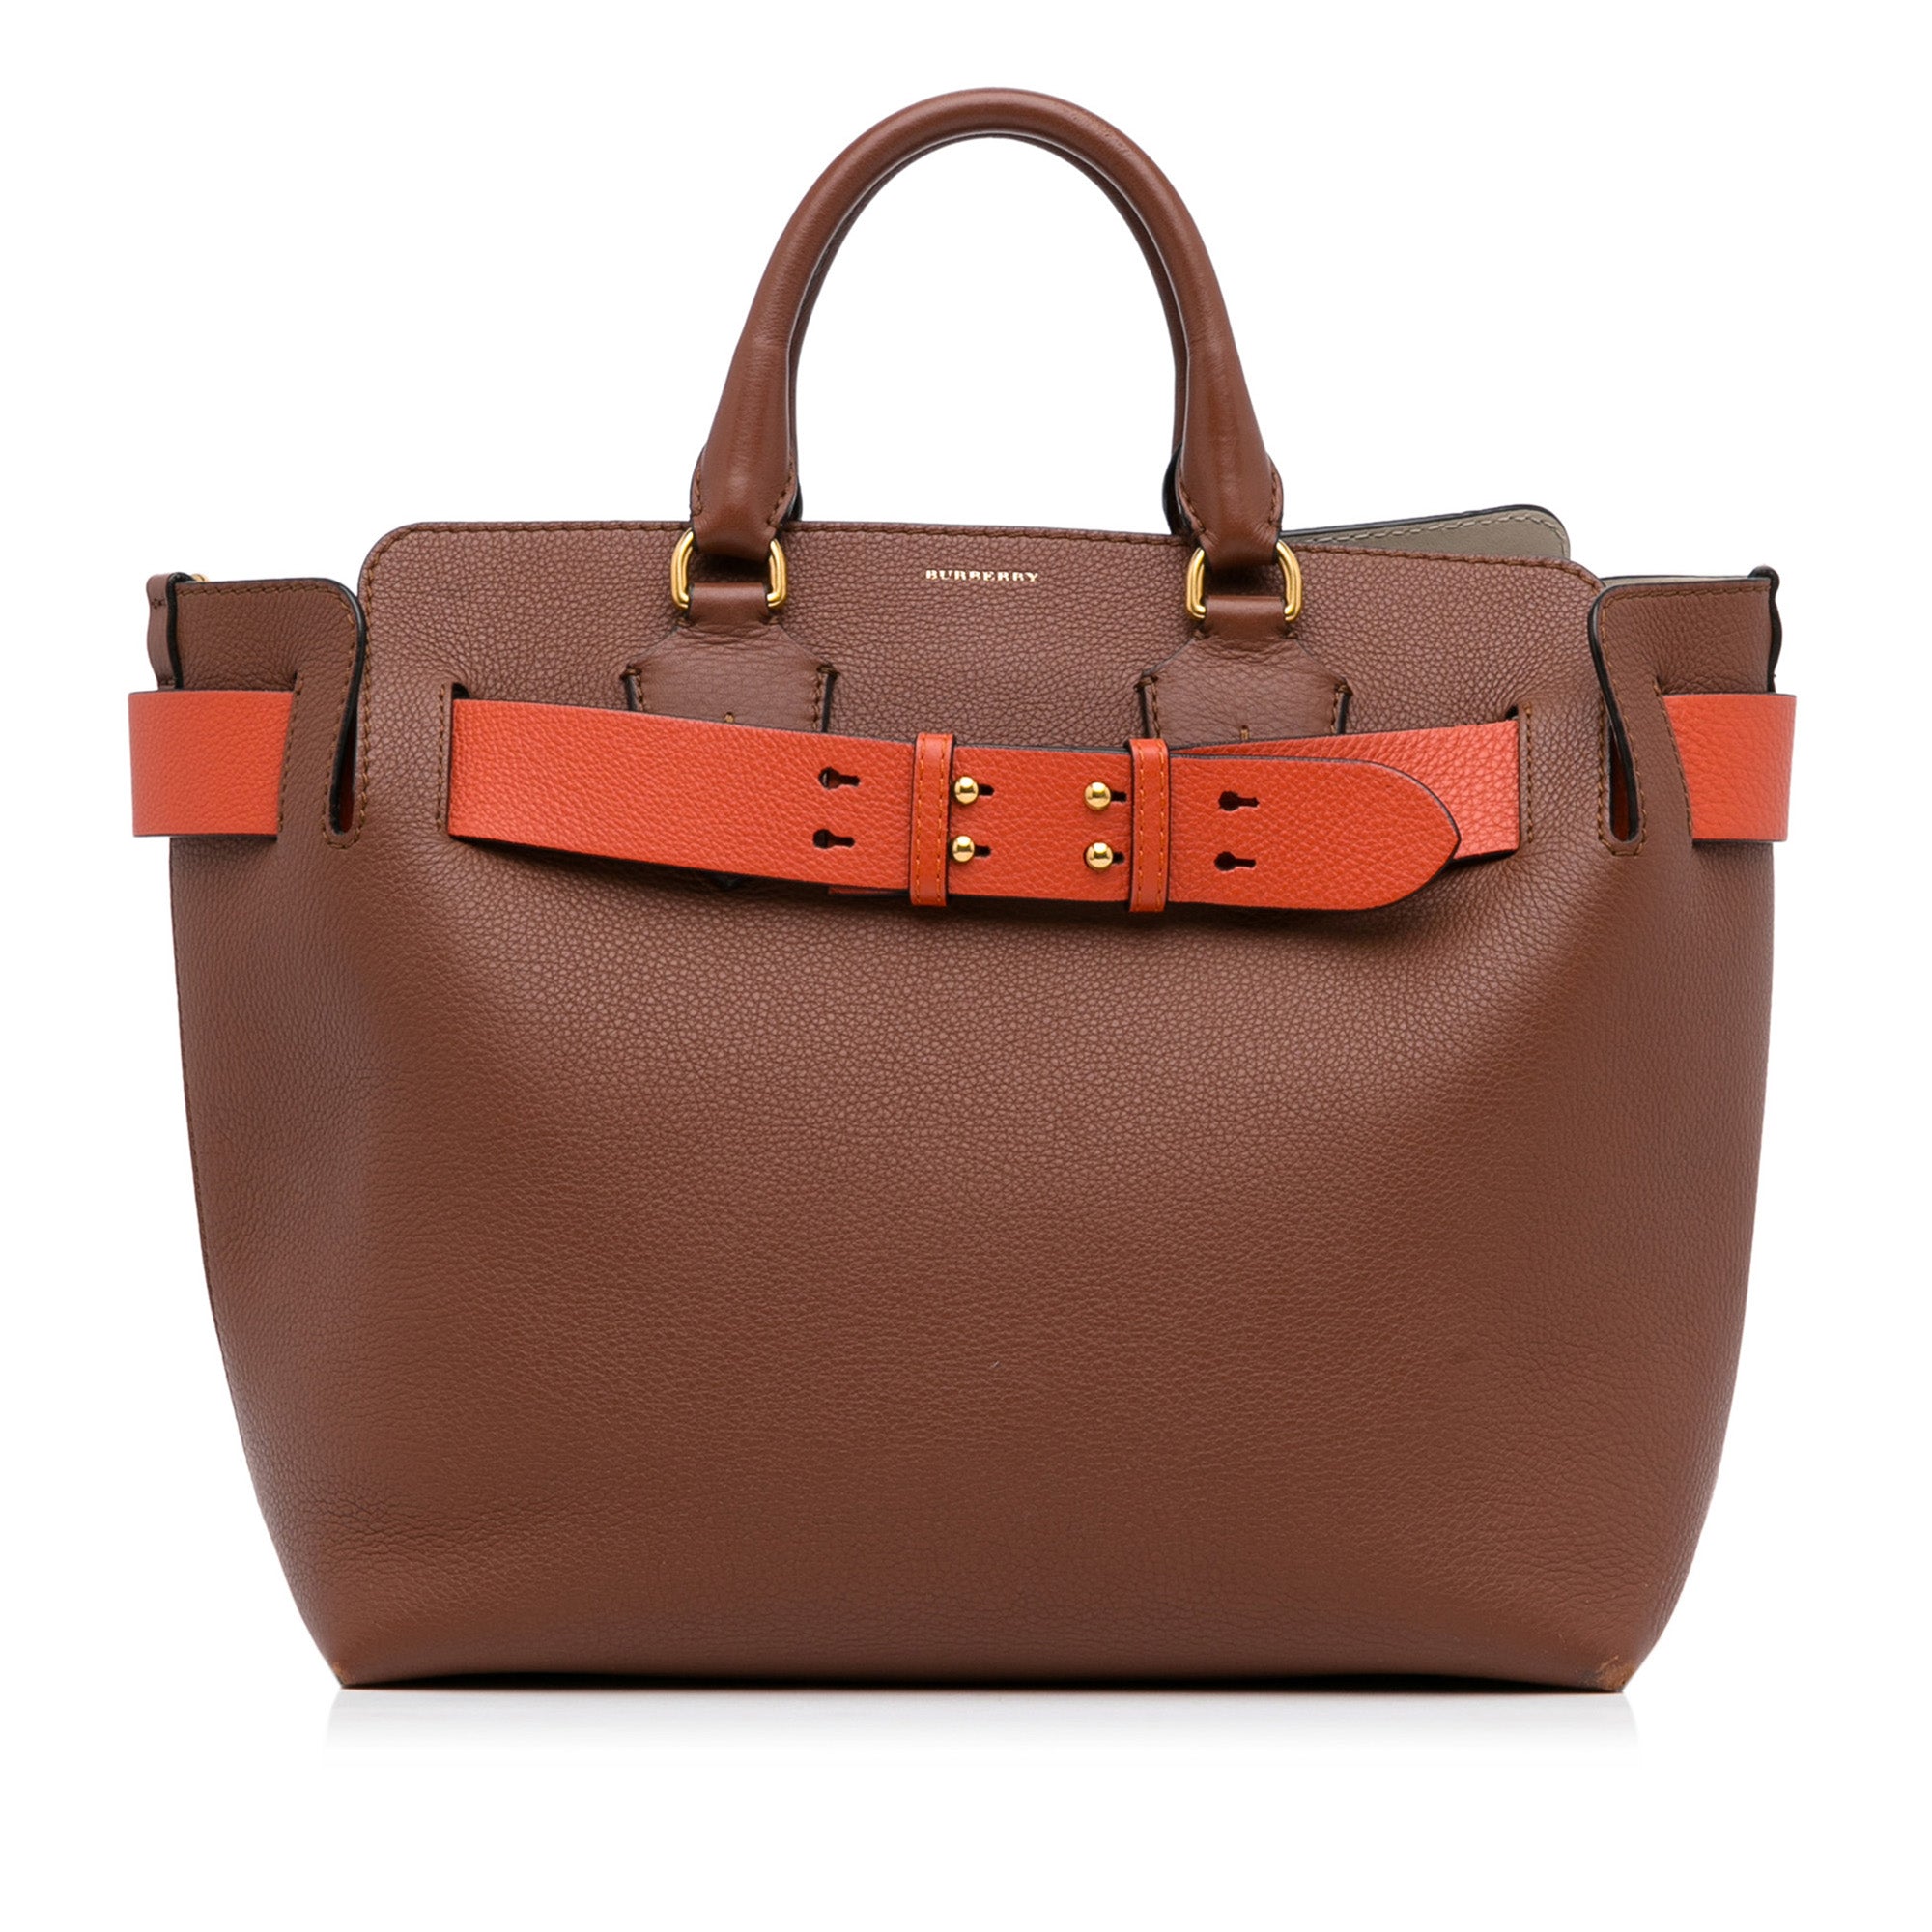 Burberry Belt Handbag Medium Brown Leather